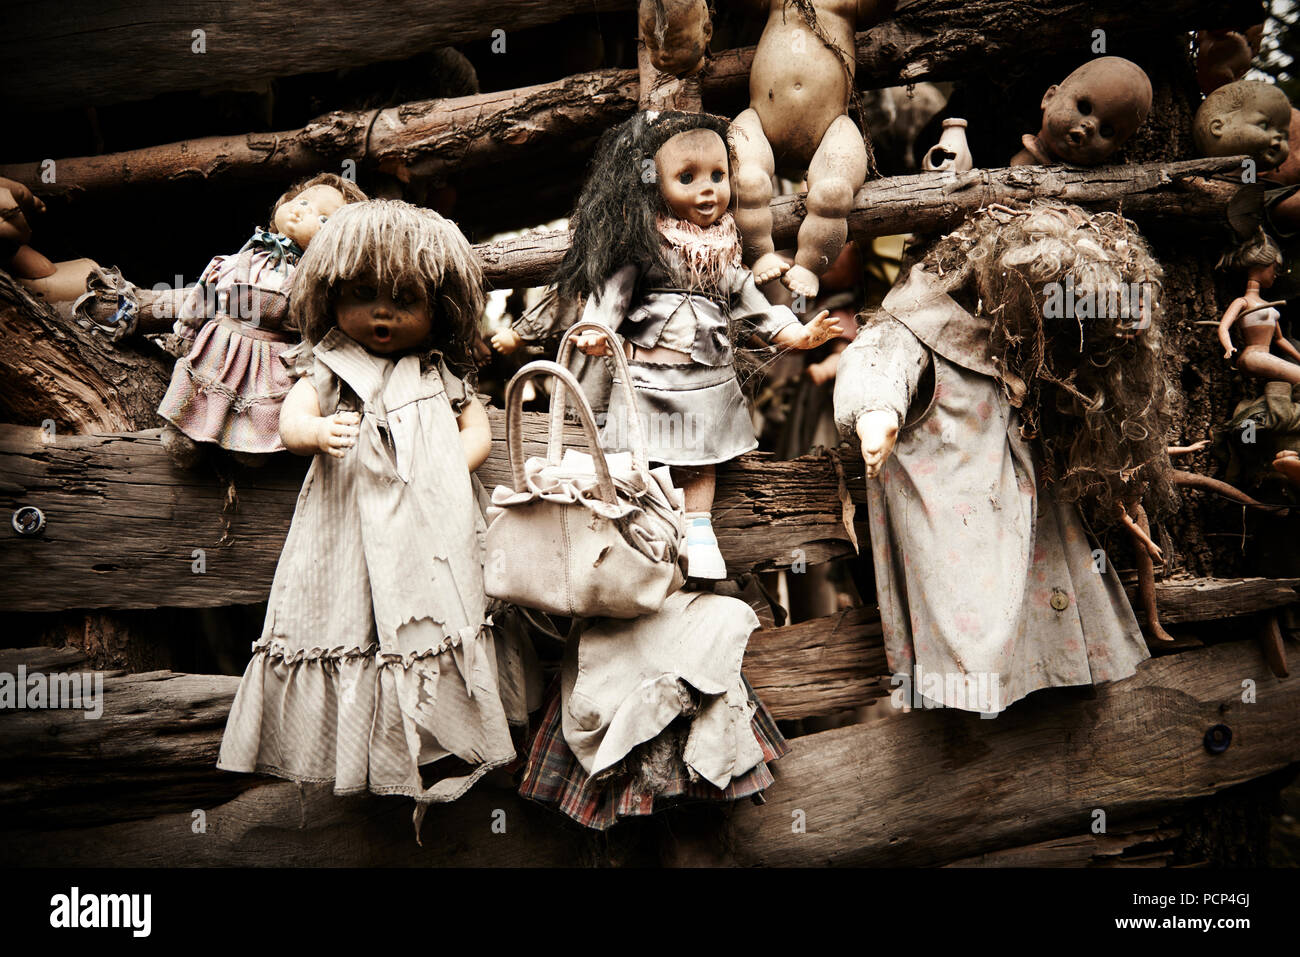 Dolls from La Isla de las Muñecas - The Island of the Dolls, Xochimilco  Mexico Stock Photo - Alamy